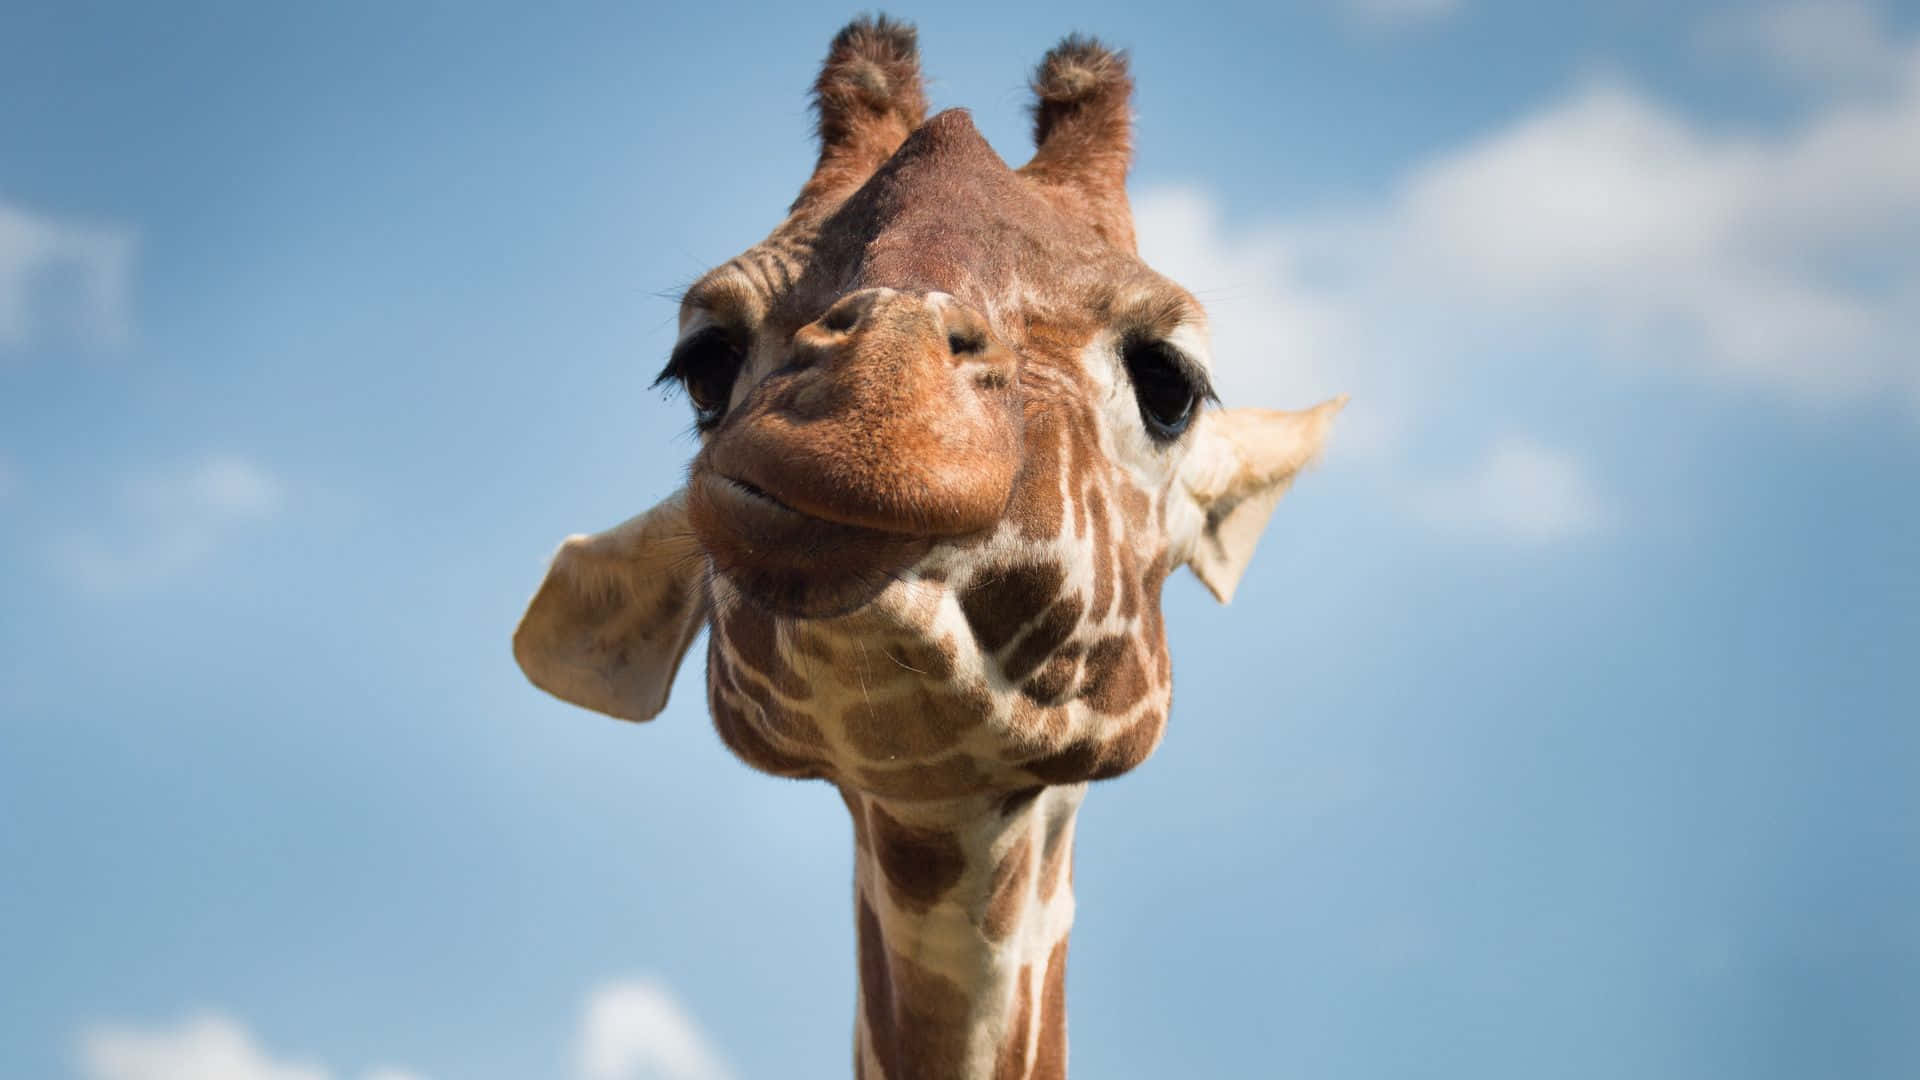 Funny Giraffe Blue Sky Headshot Picture